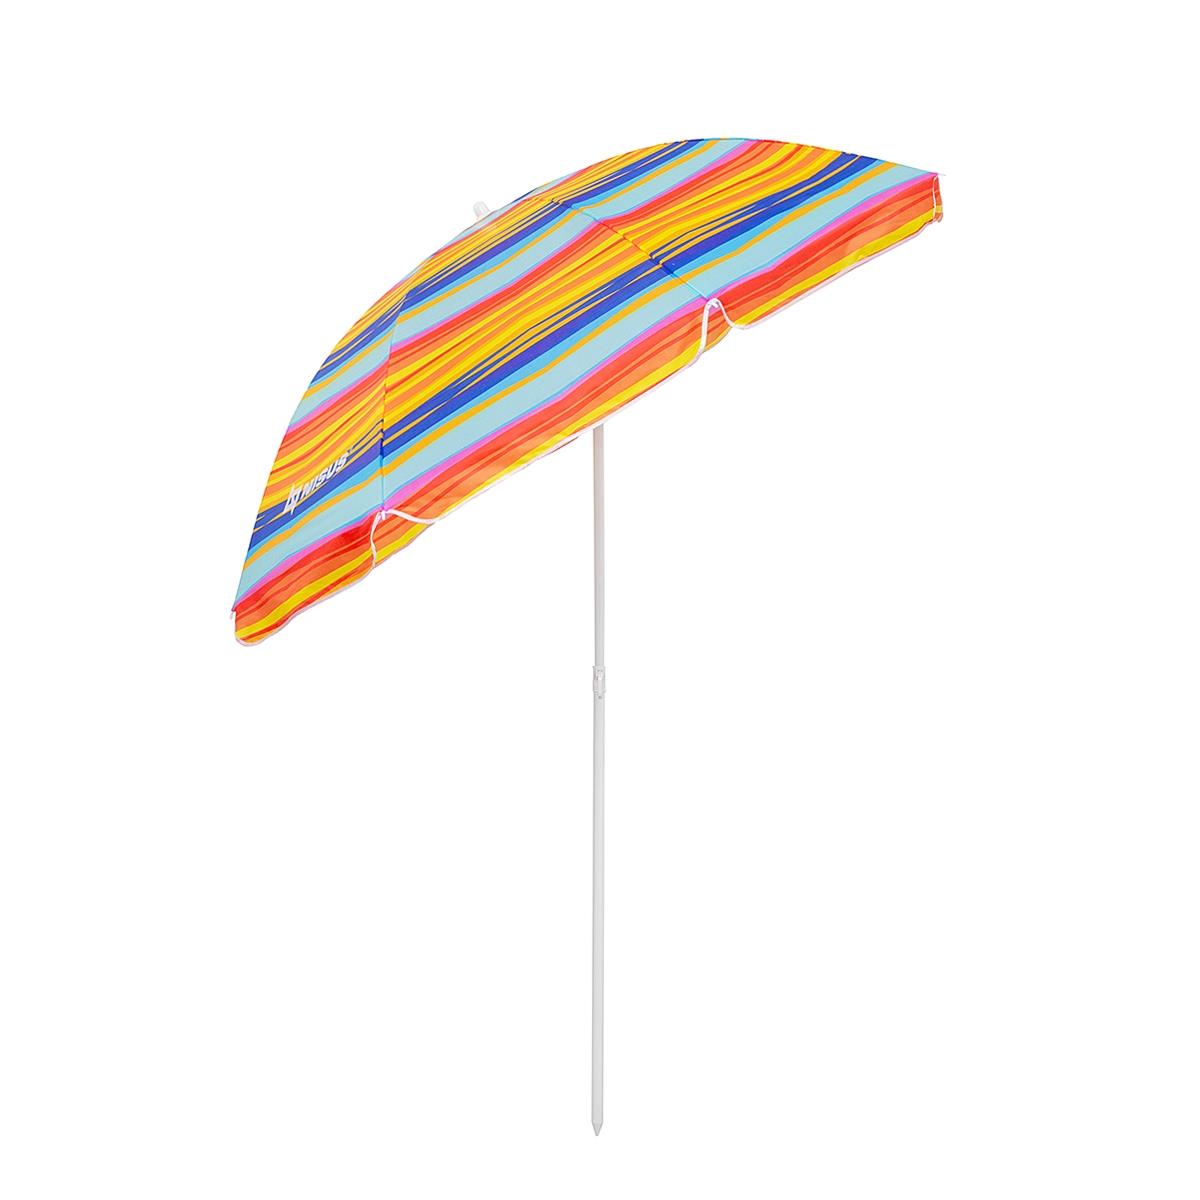 Зонт пляжный d 2,00м с наклоном (22/25/170Т) NA-200N-SO Nisus зонт пляжный d 2 00м с наклоном салатовый 28 32 210d na 200n lg nisus